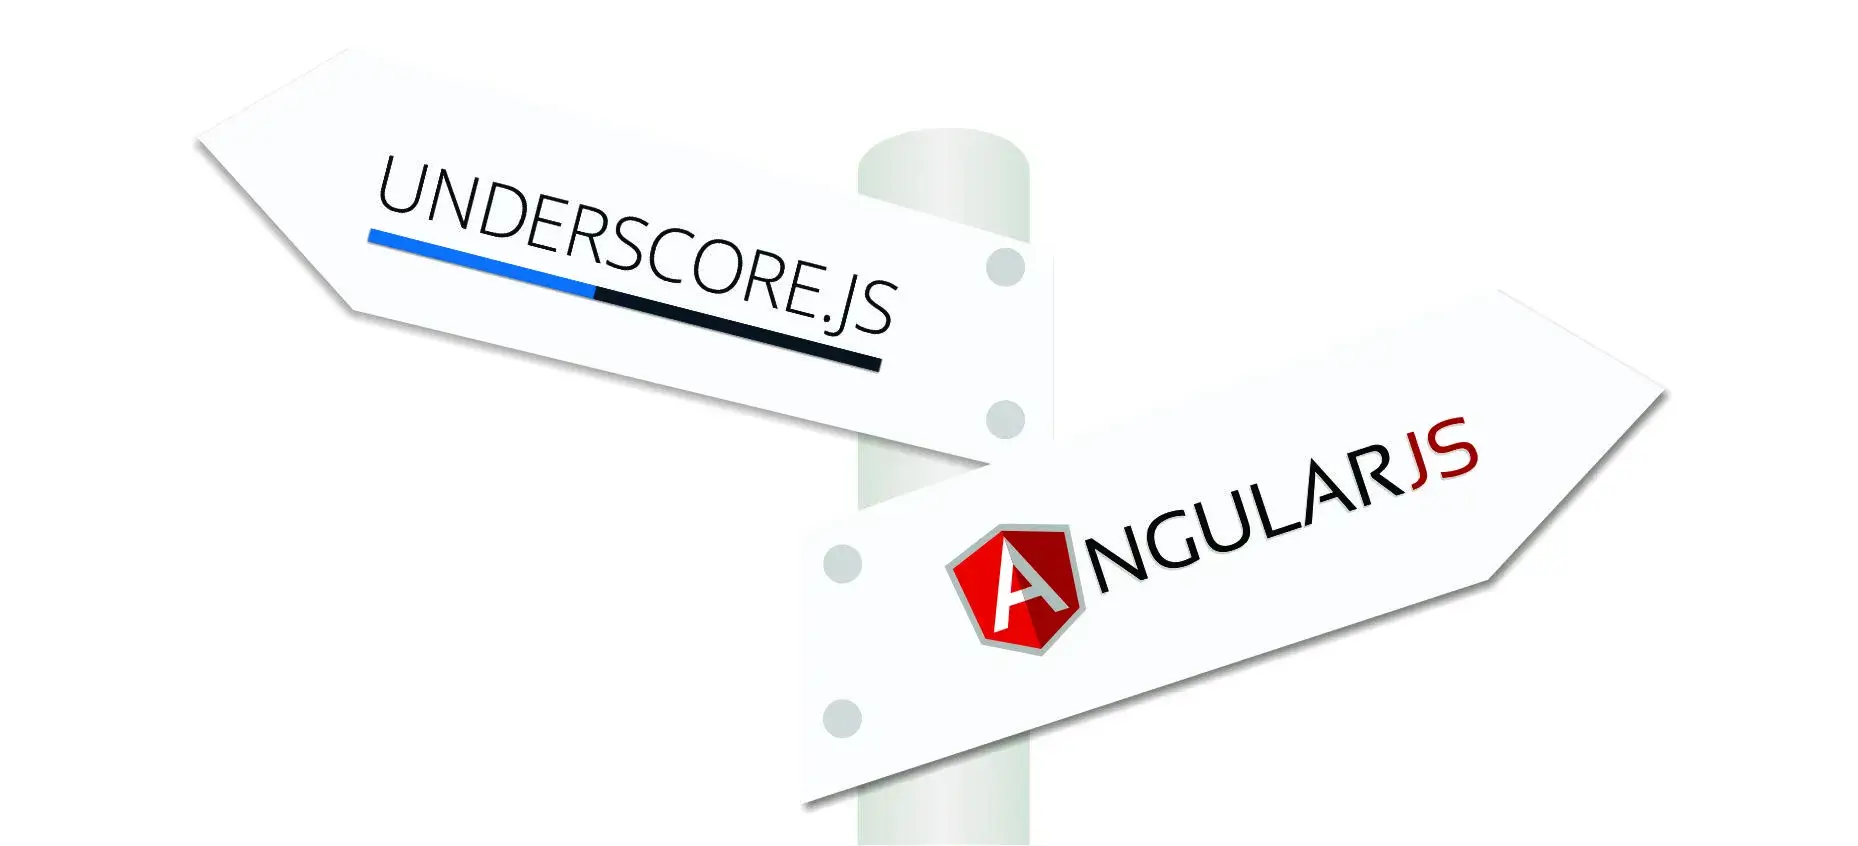 uderscore js vs angular js